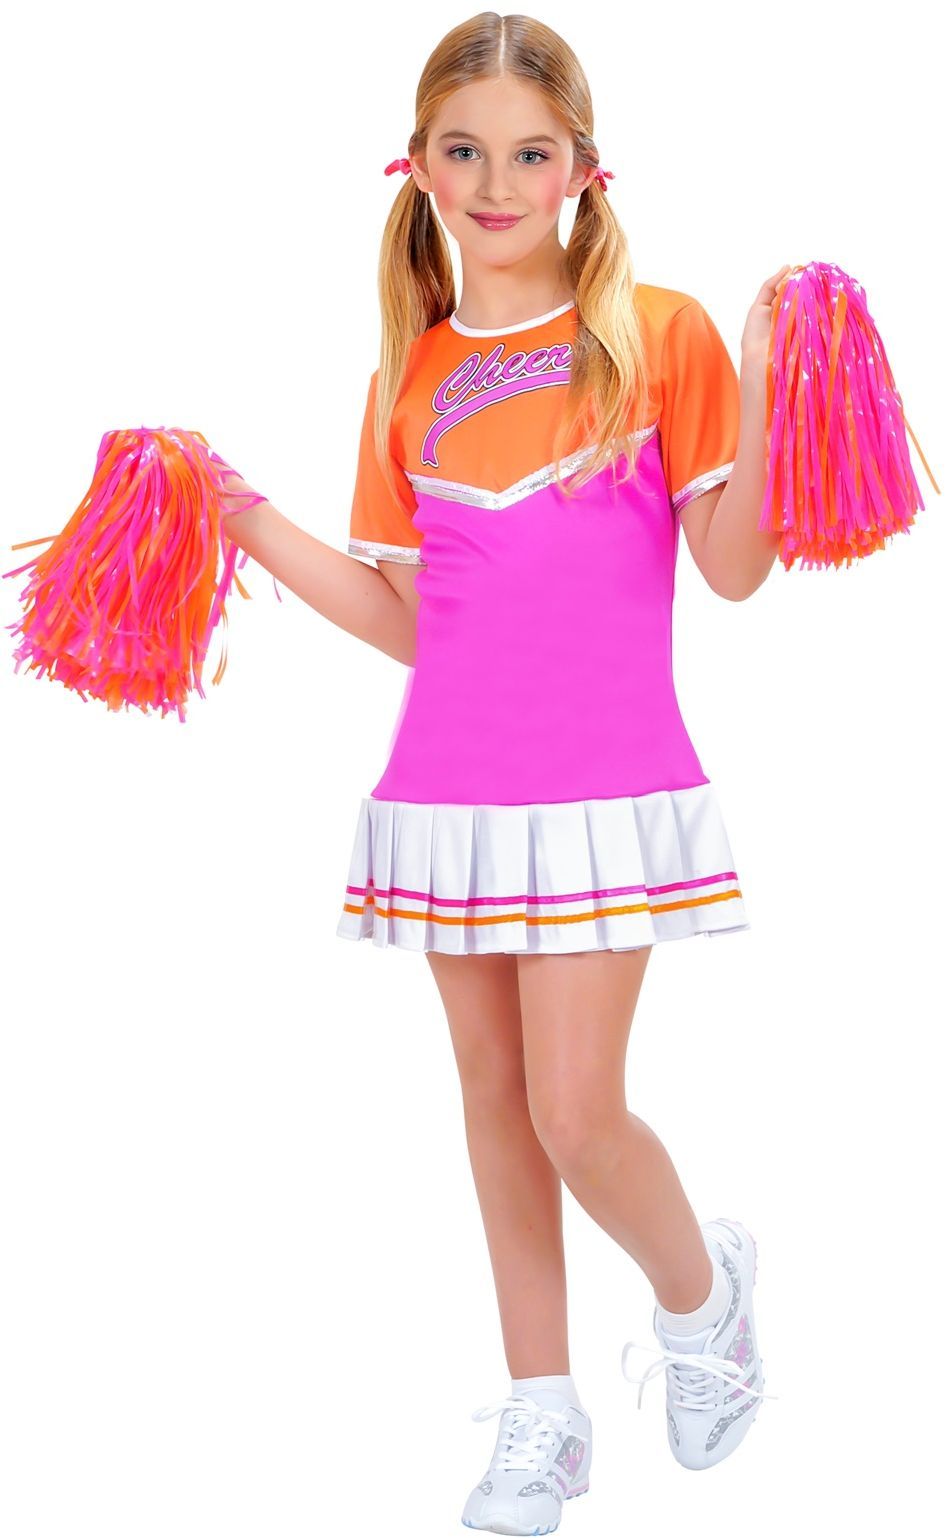 Cheerleader jurkje kind roze oranje